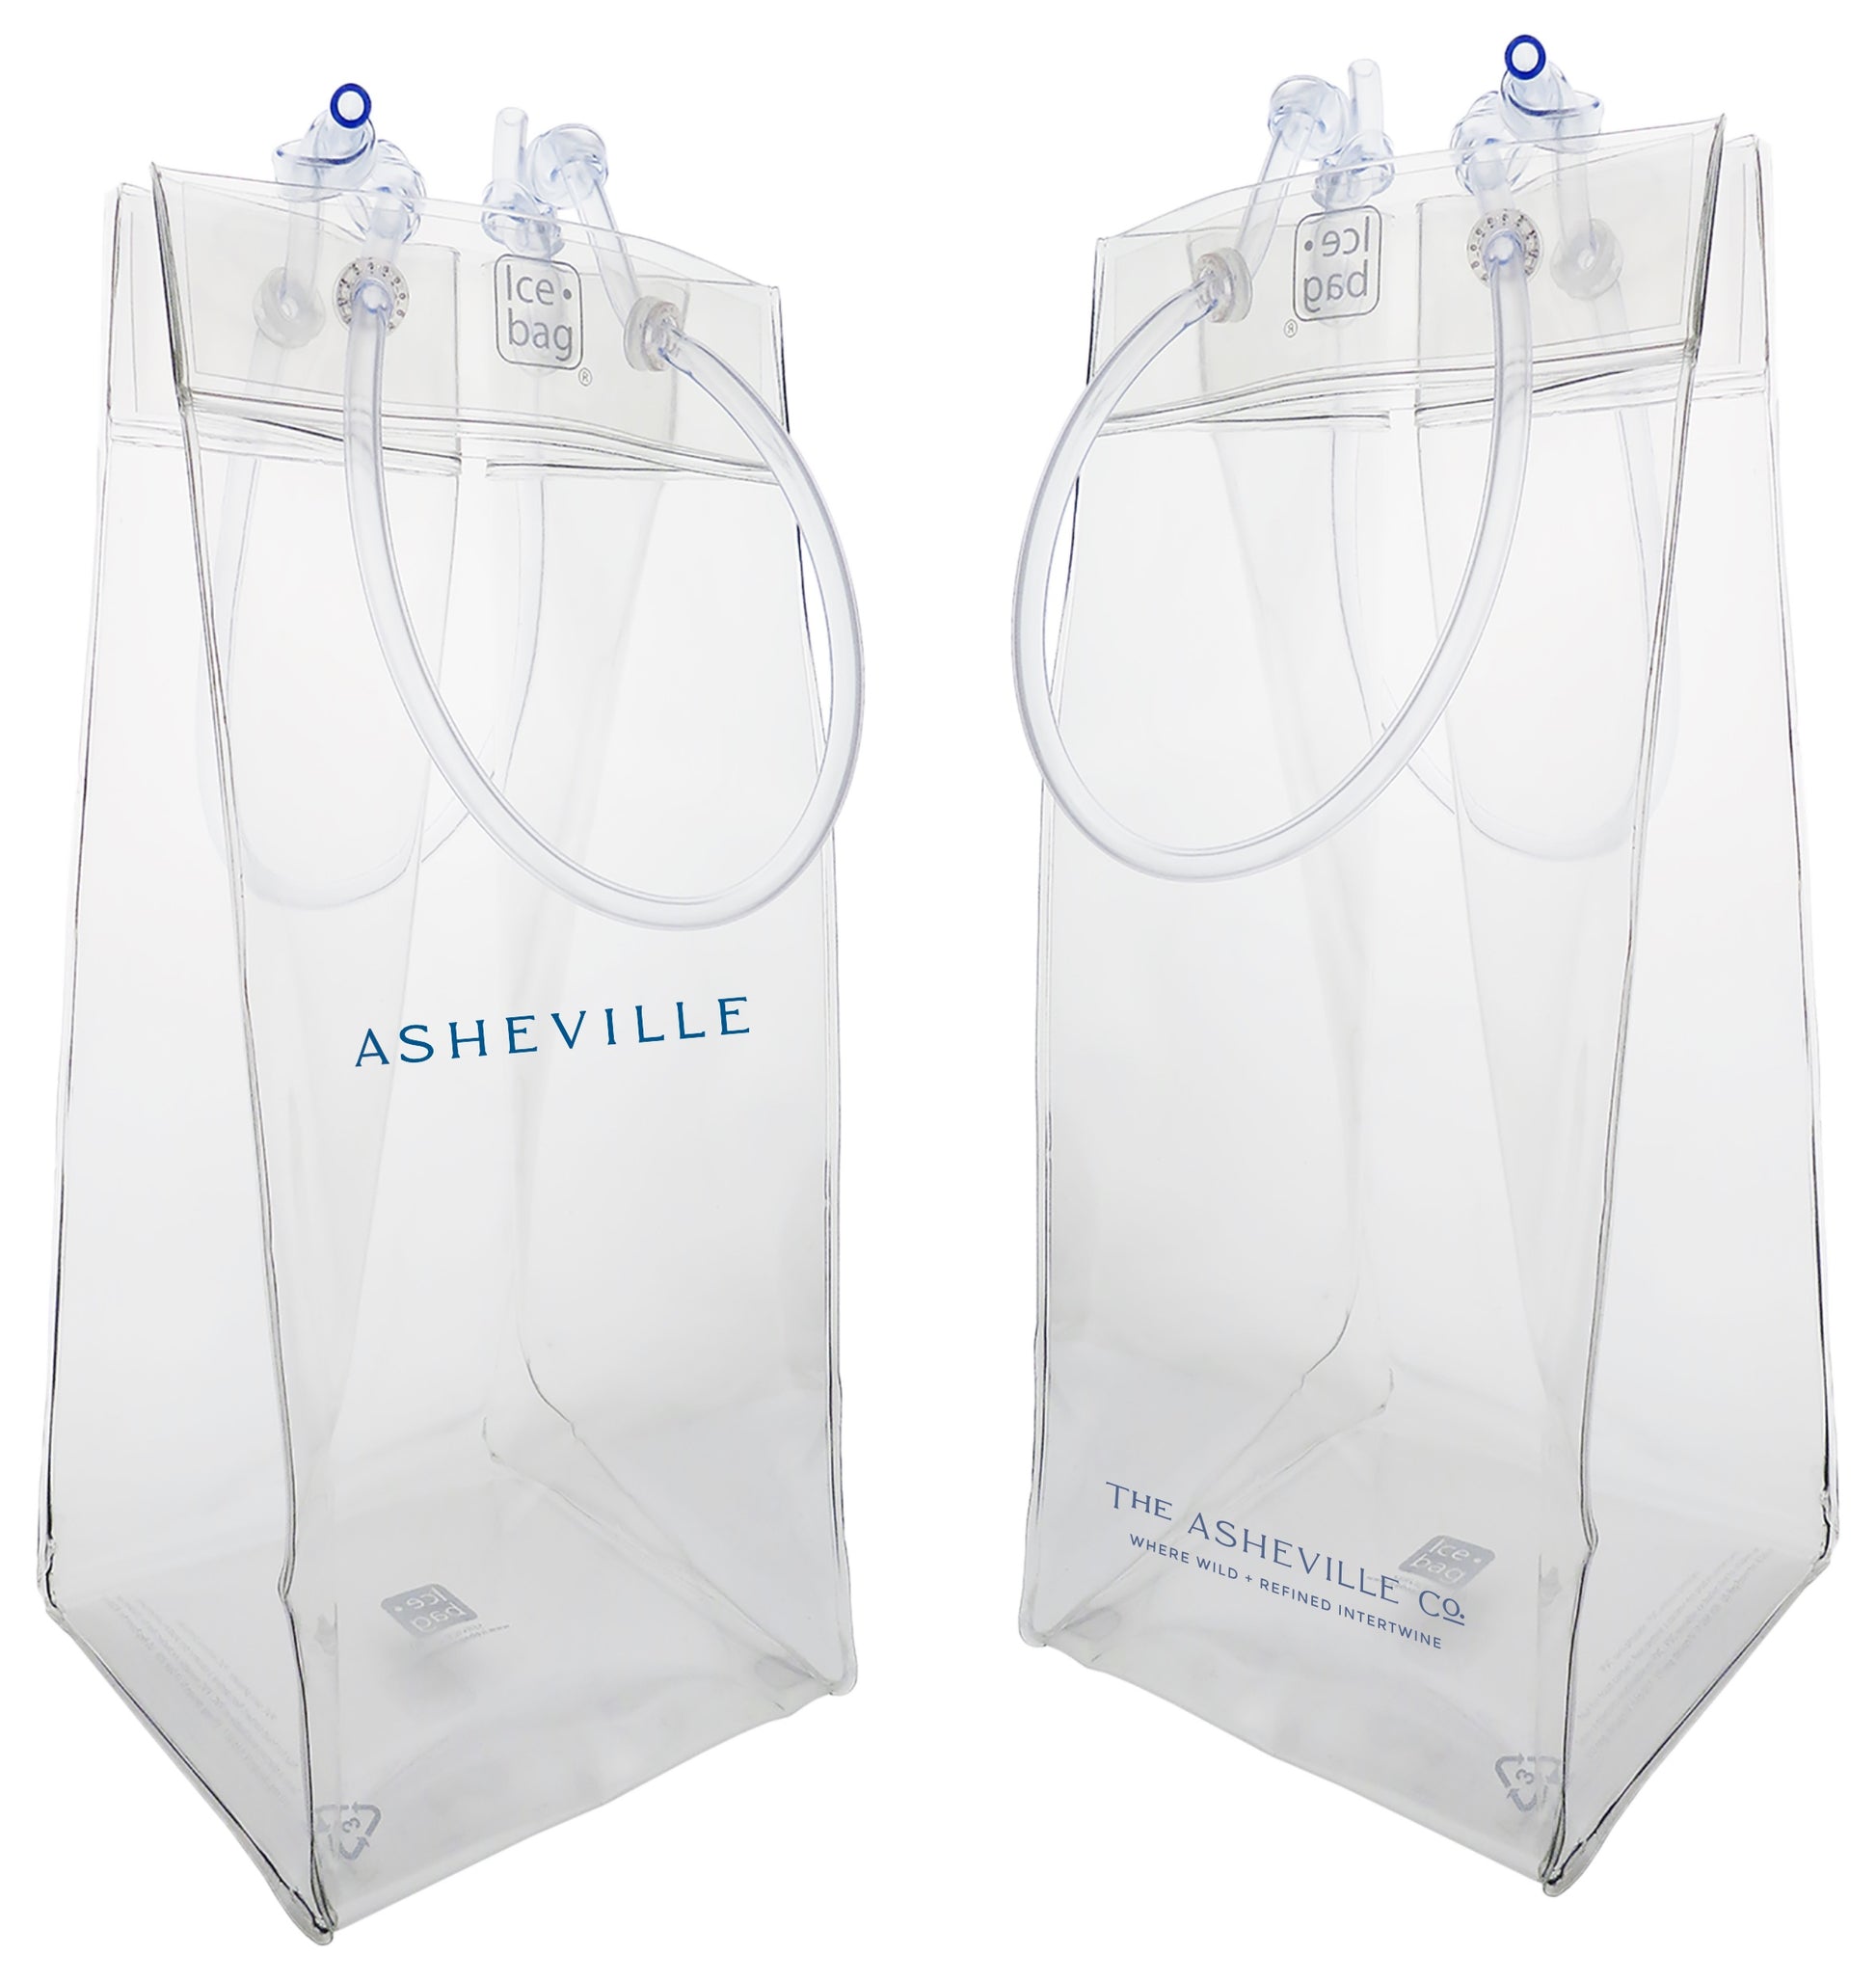 ASHEVILLE ice bucket IceBag Beverage Cooler(®) for chilled wine - The ASHEVILLE Co. TM